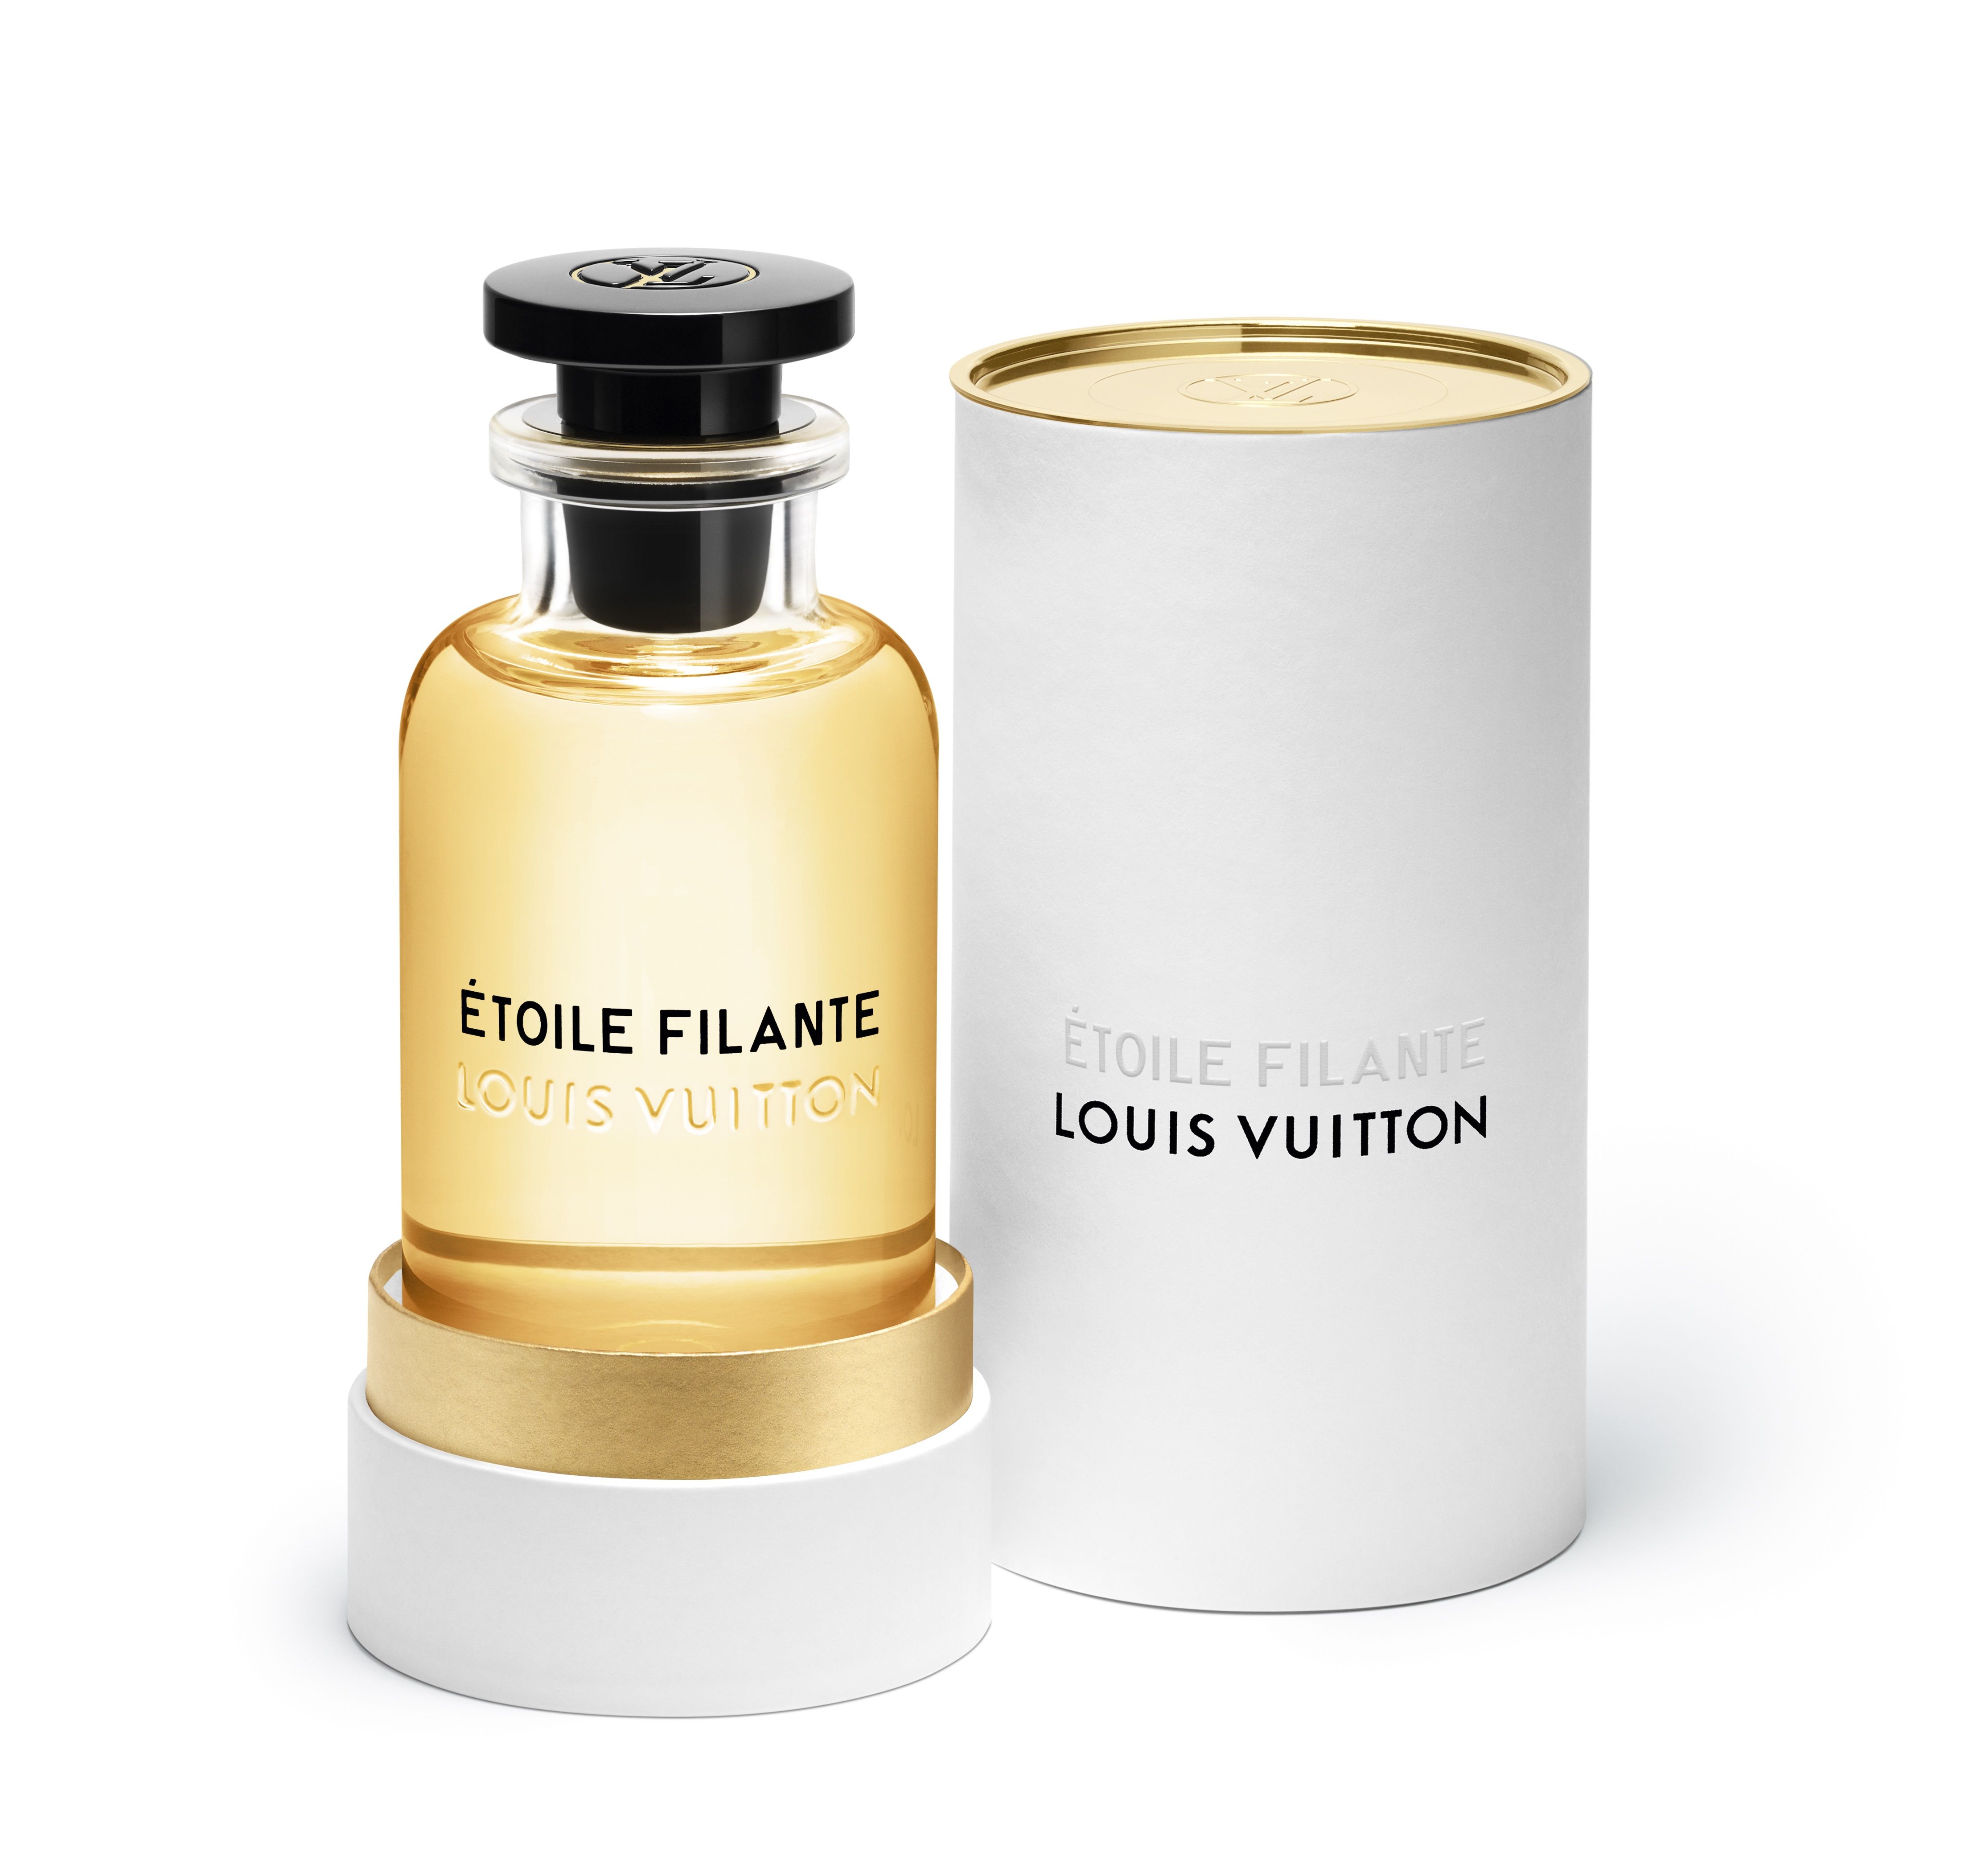 New Louis Vuitton Perfume Rhapsody Definition Paul Smith